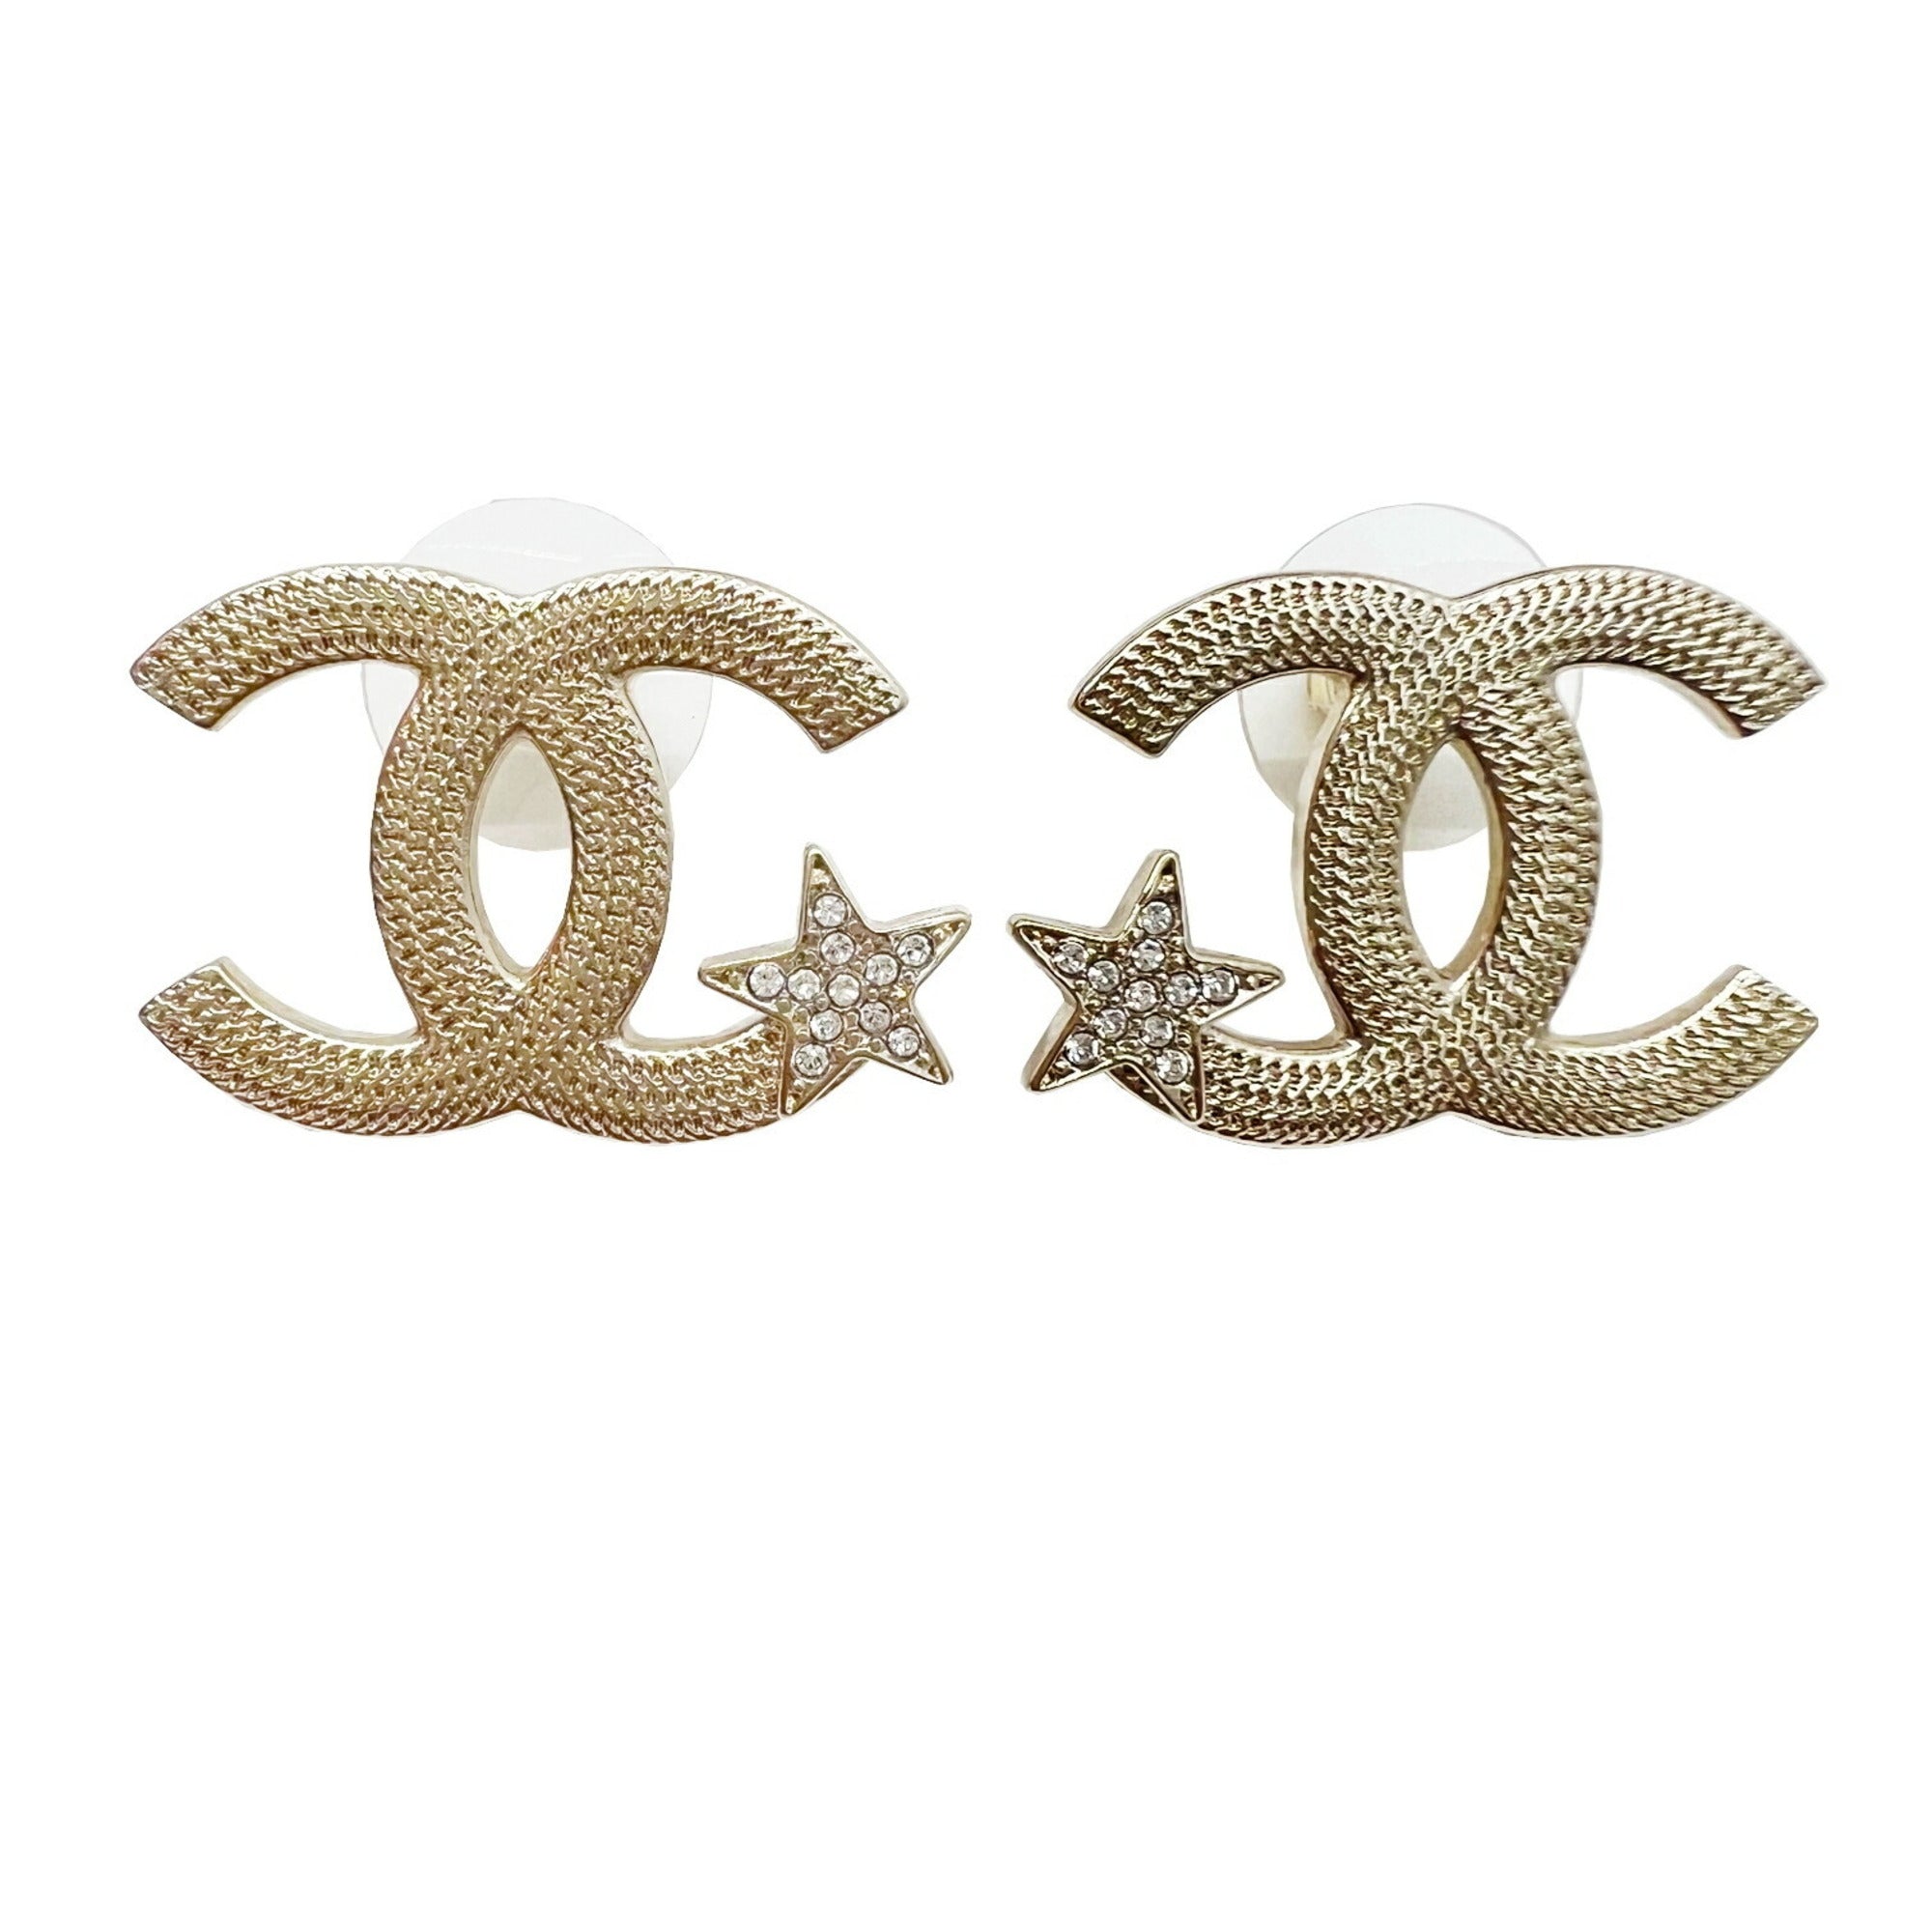 Chanel earrings vintage coco - Gem